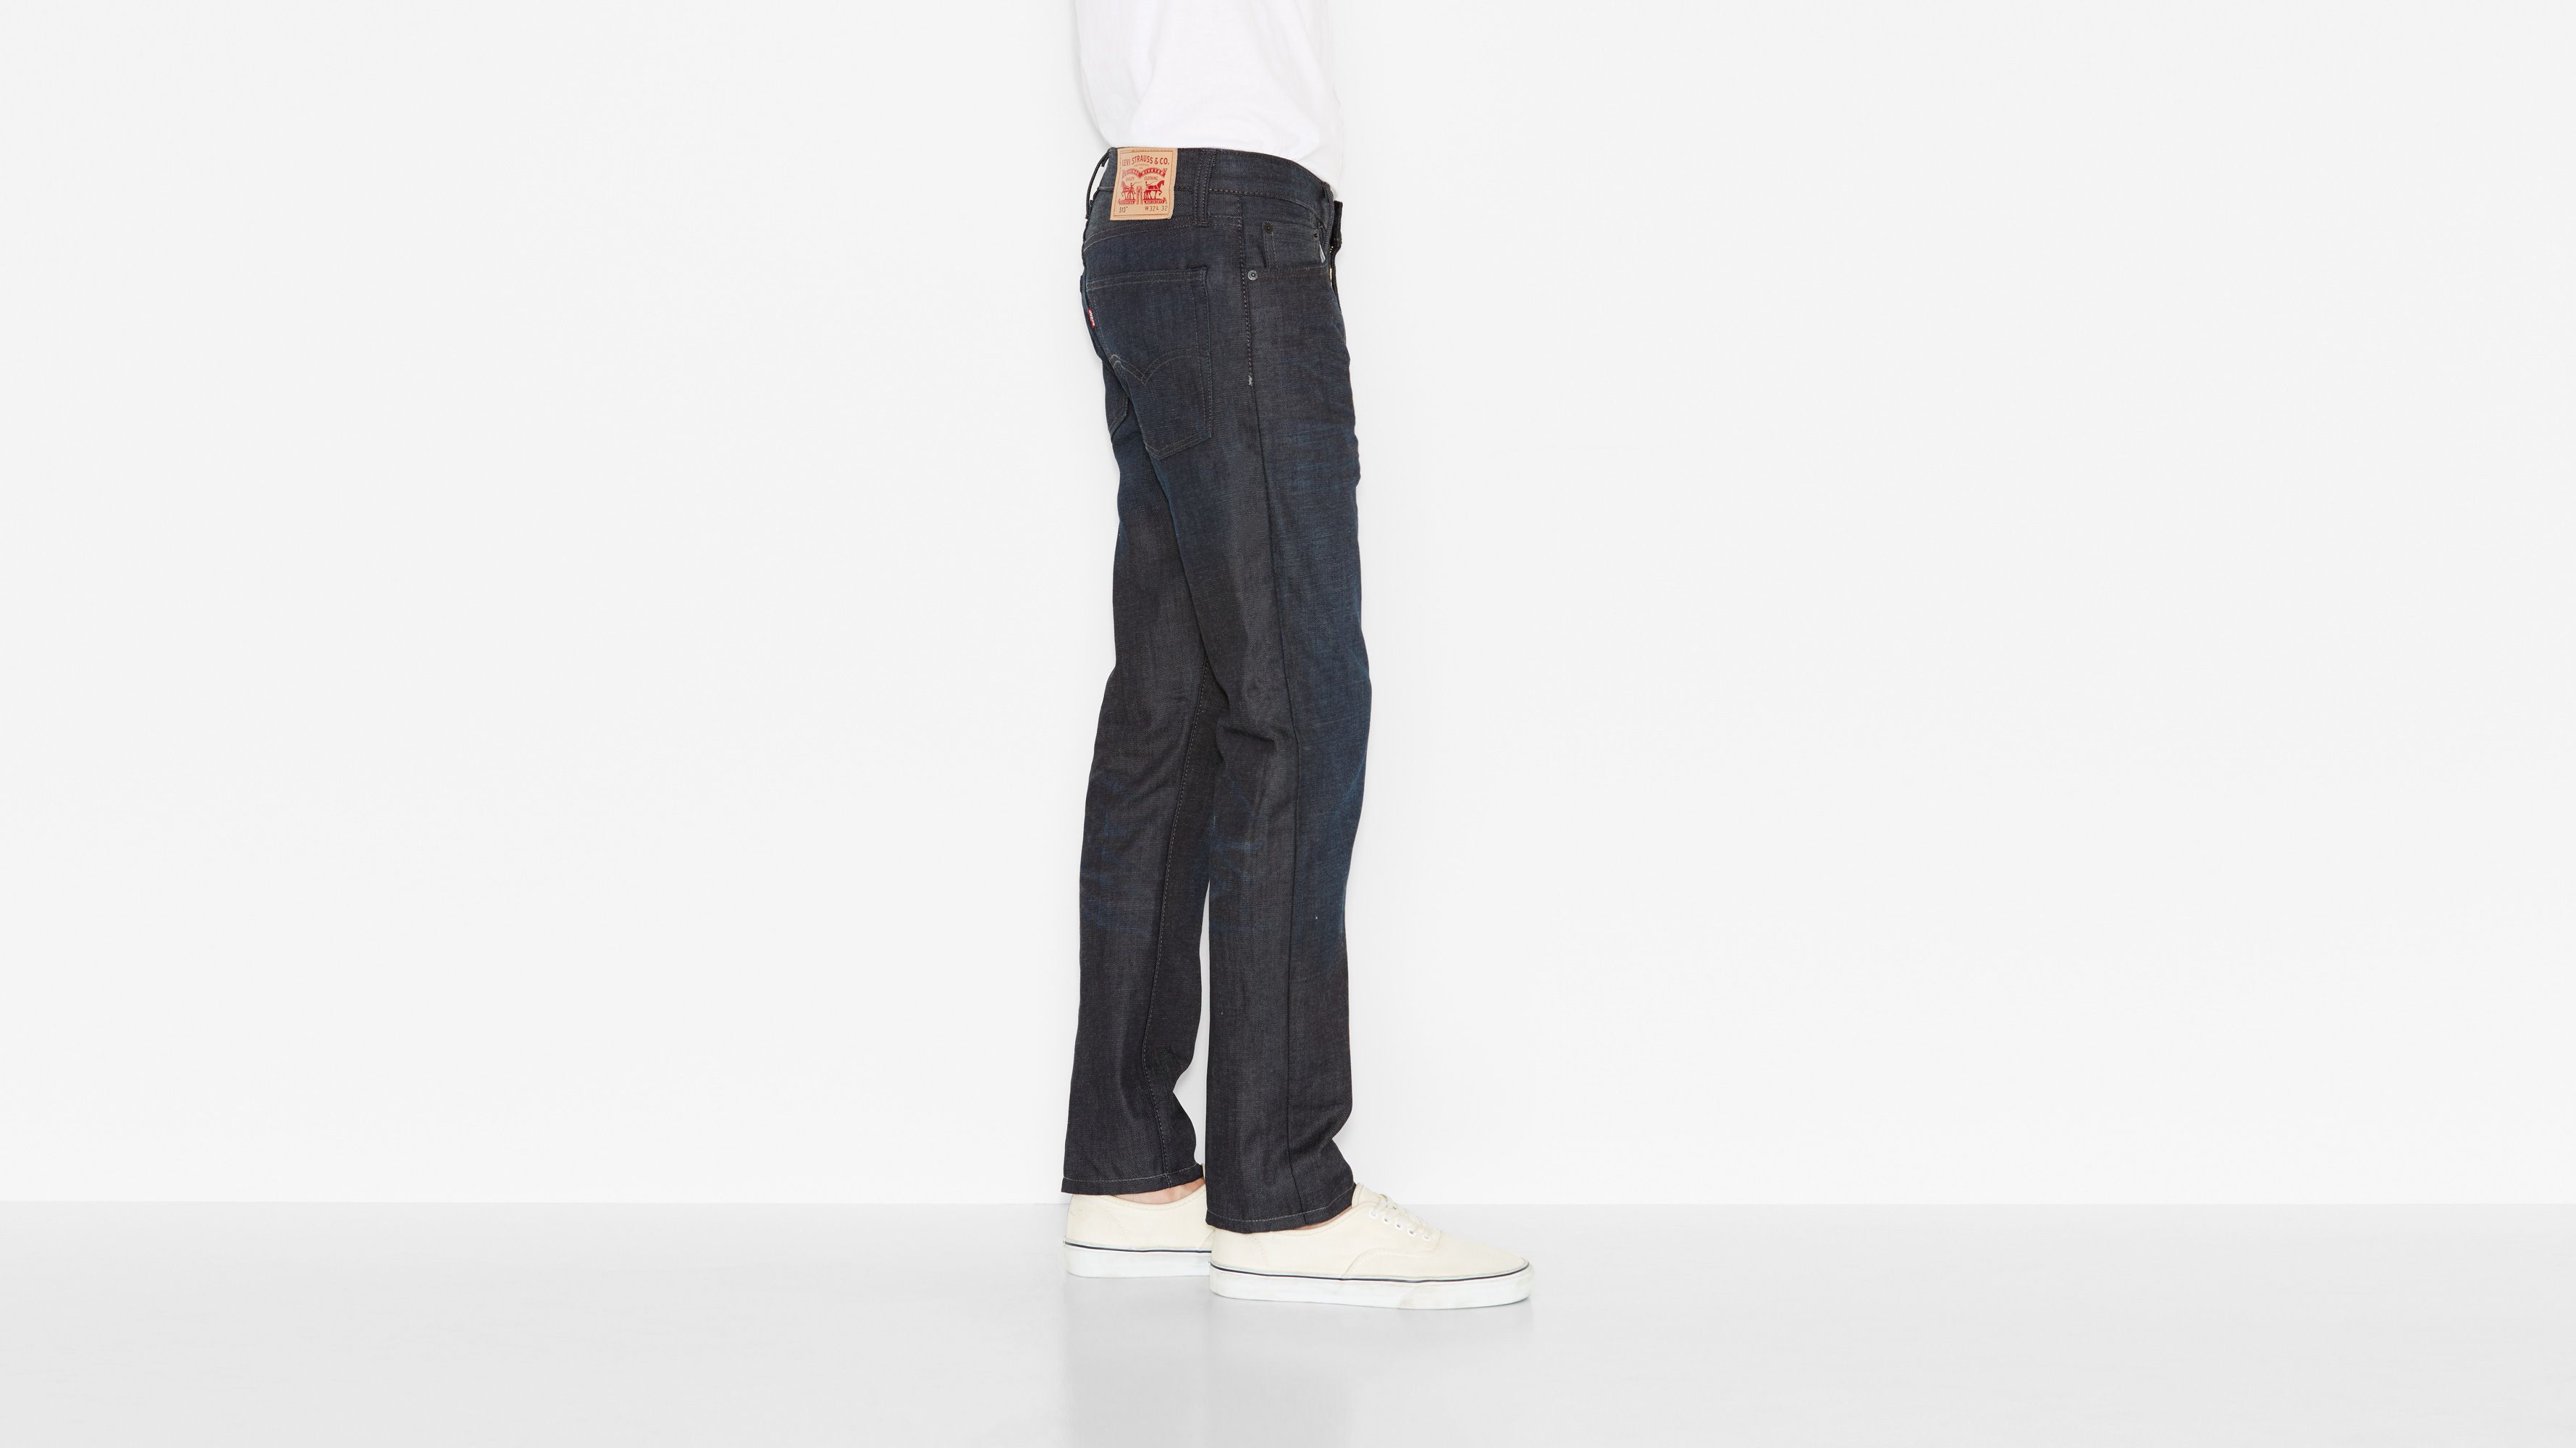 levi's 513 grey jeans